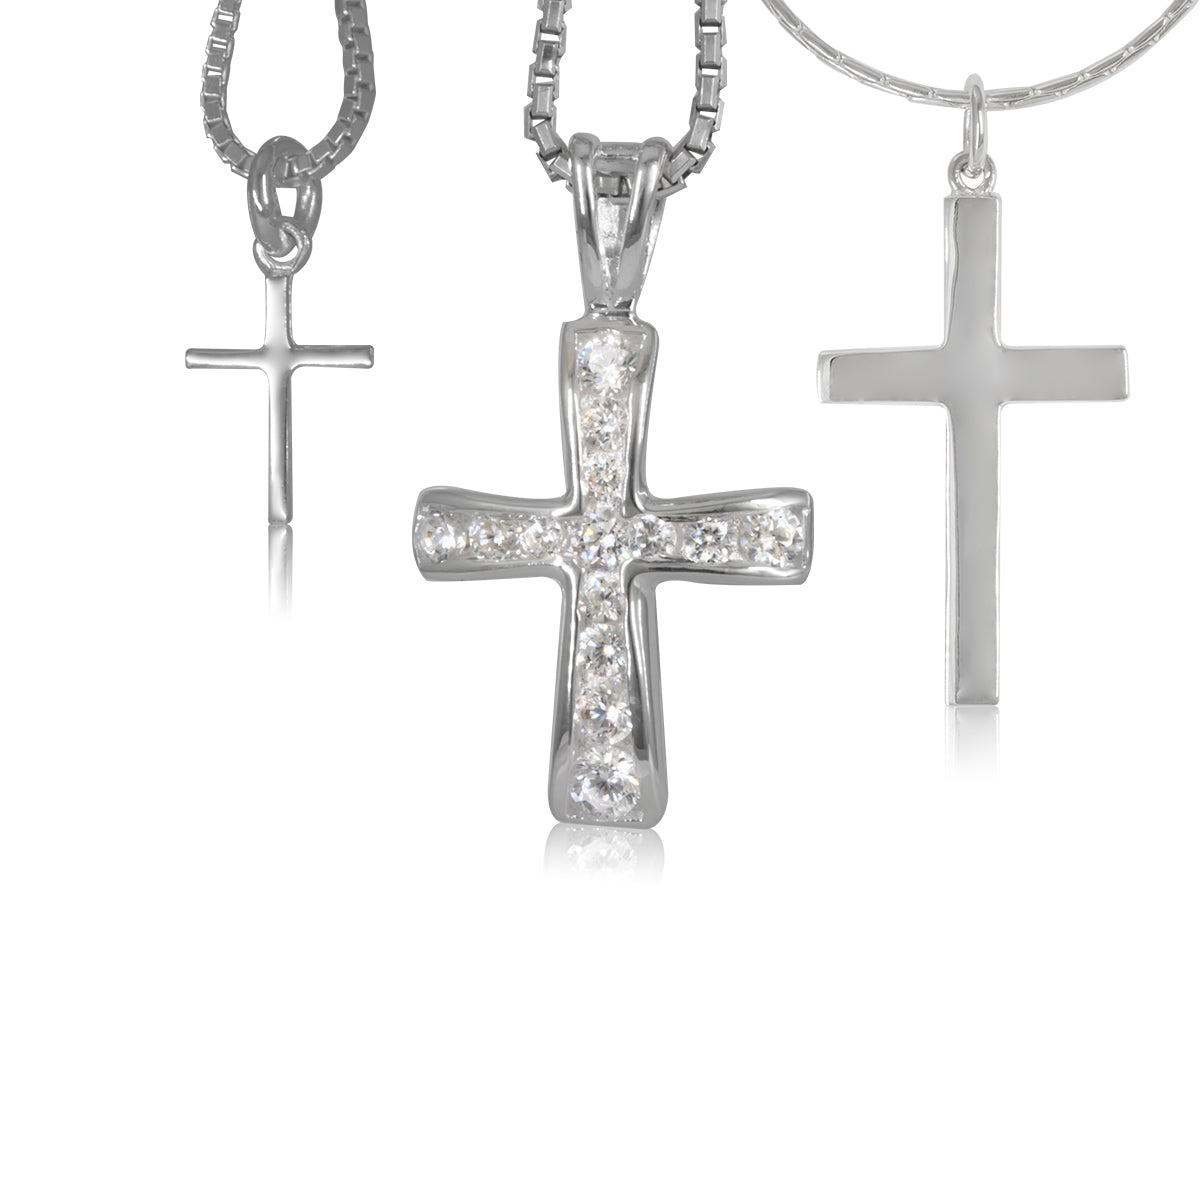 Silver cross necklaces